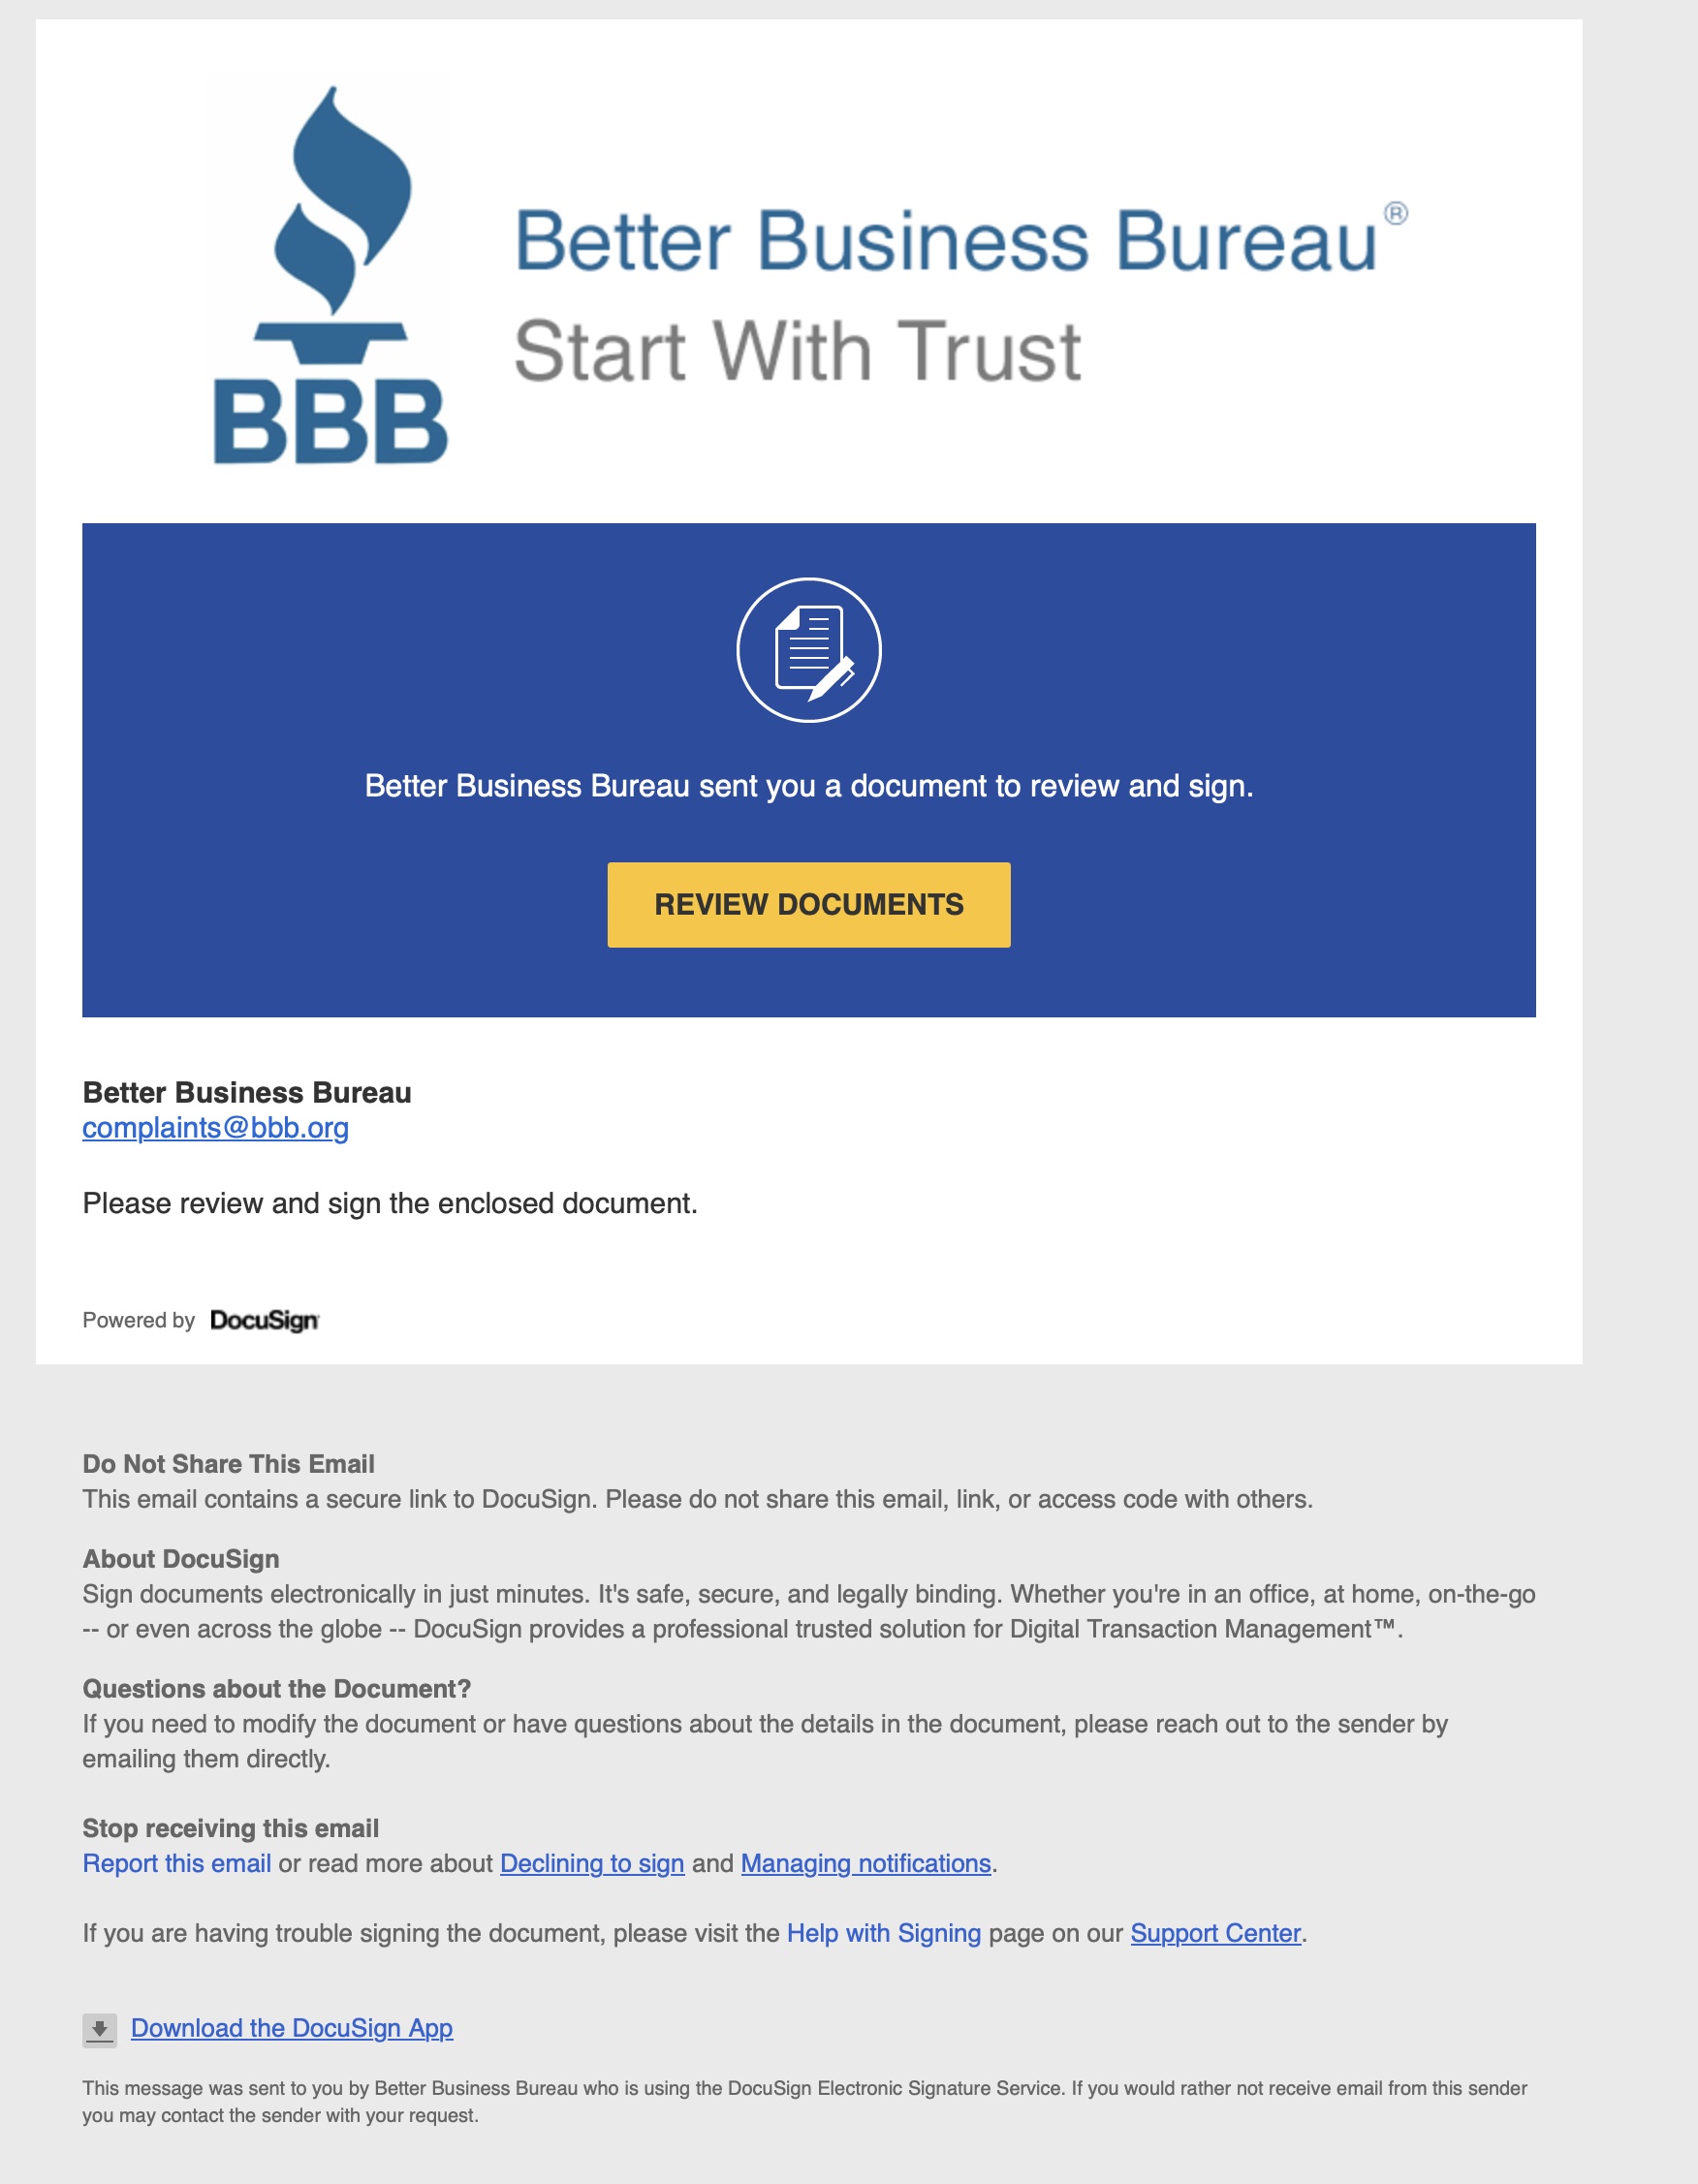 BBB Phishing Scam Warning - AfterDarkGrafx.com - After Dark Graphics